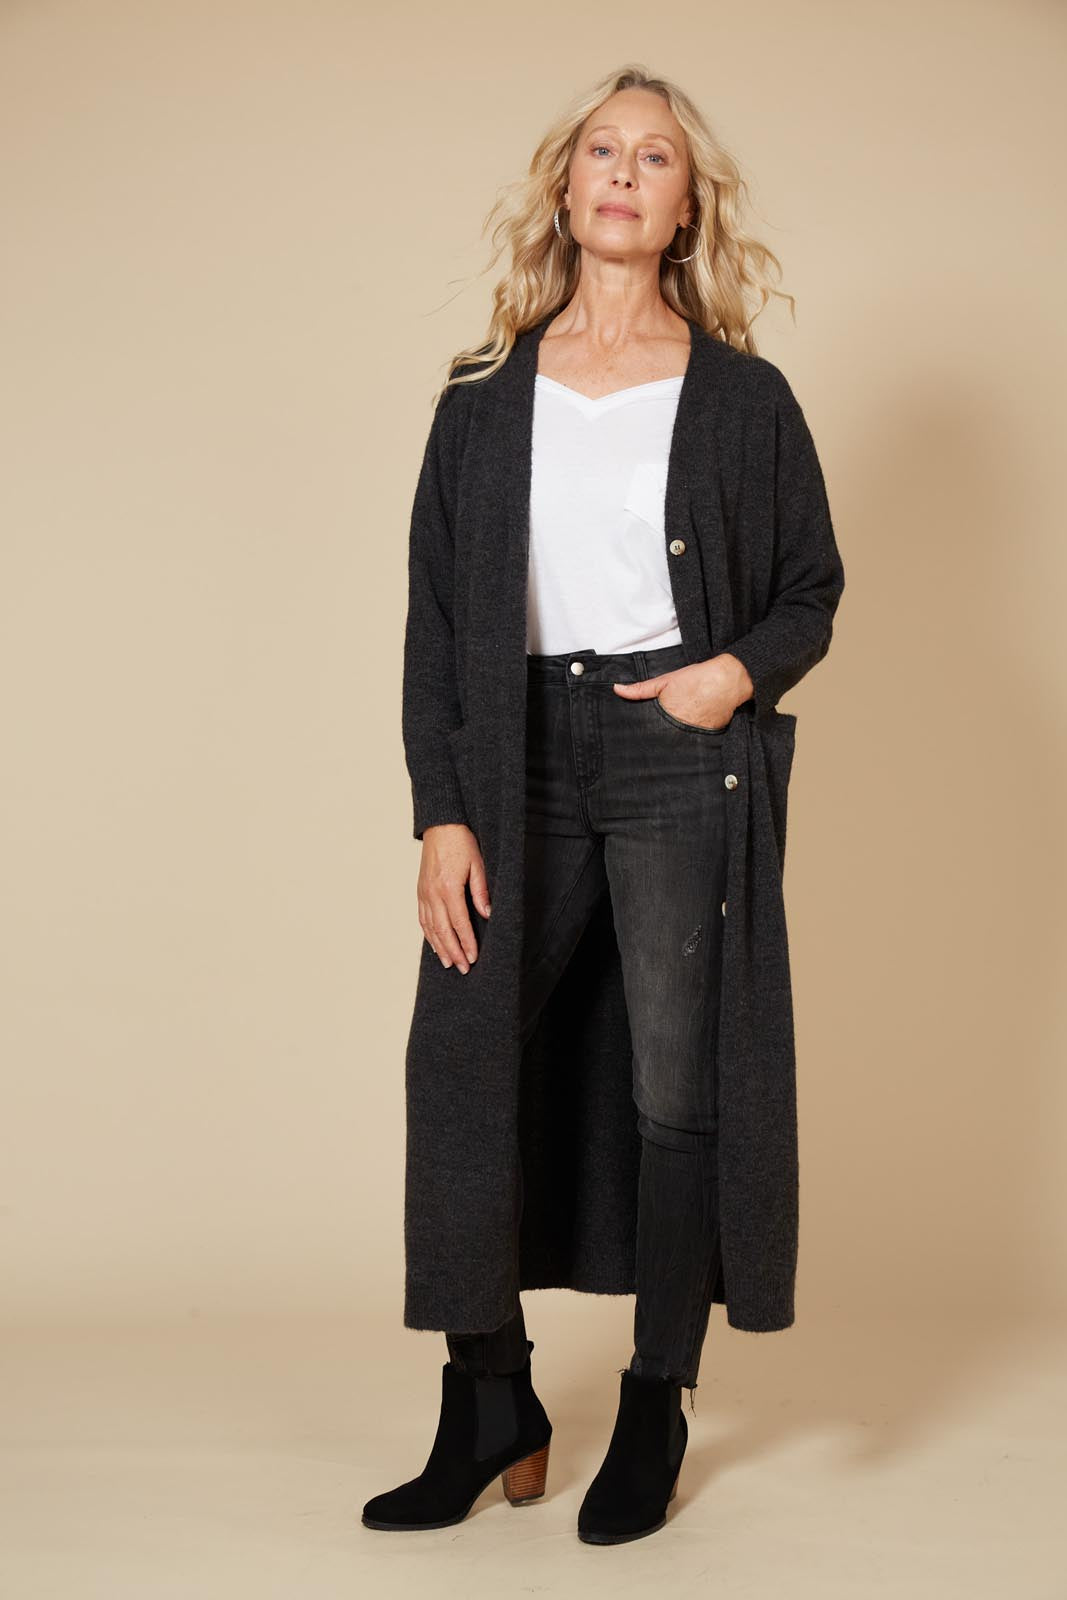 Kinsella Cardigan - Fossil - eb&ive Clothing - Knit Cardigan Long One Size